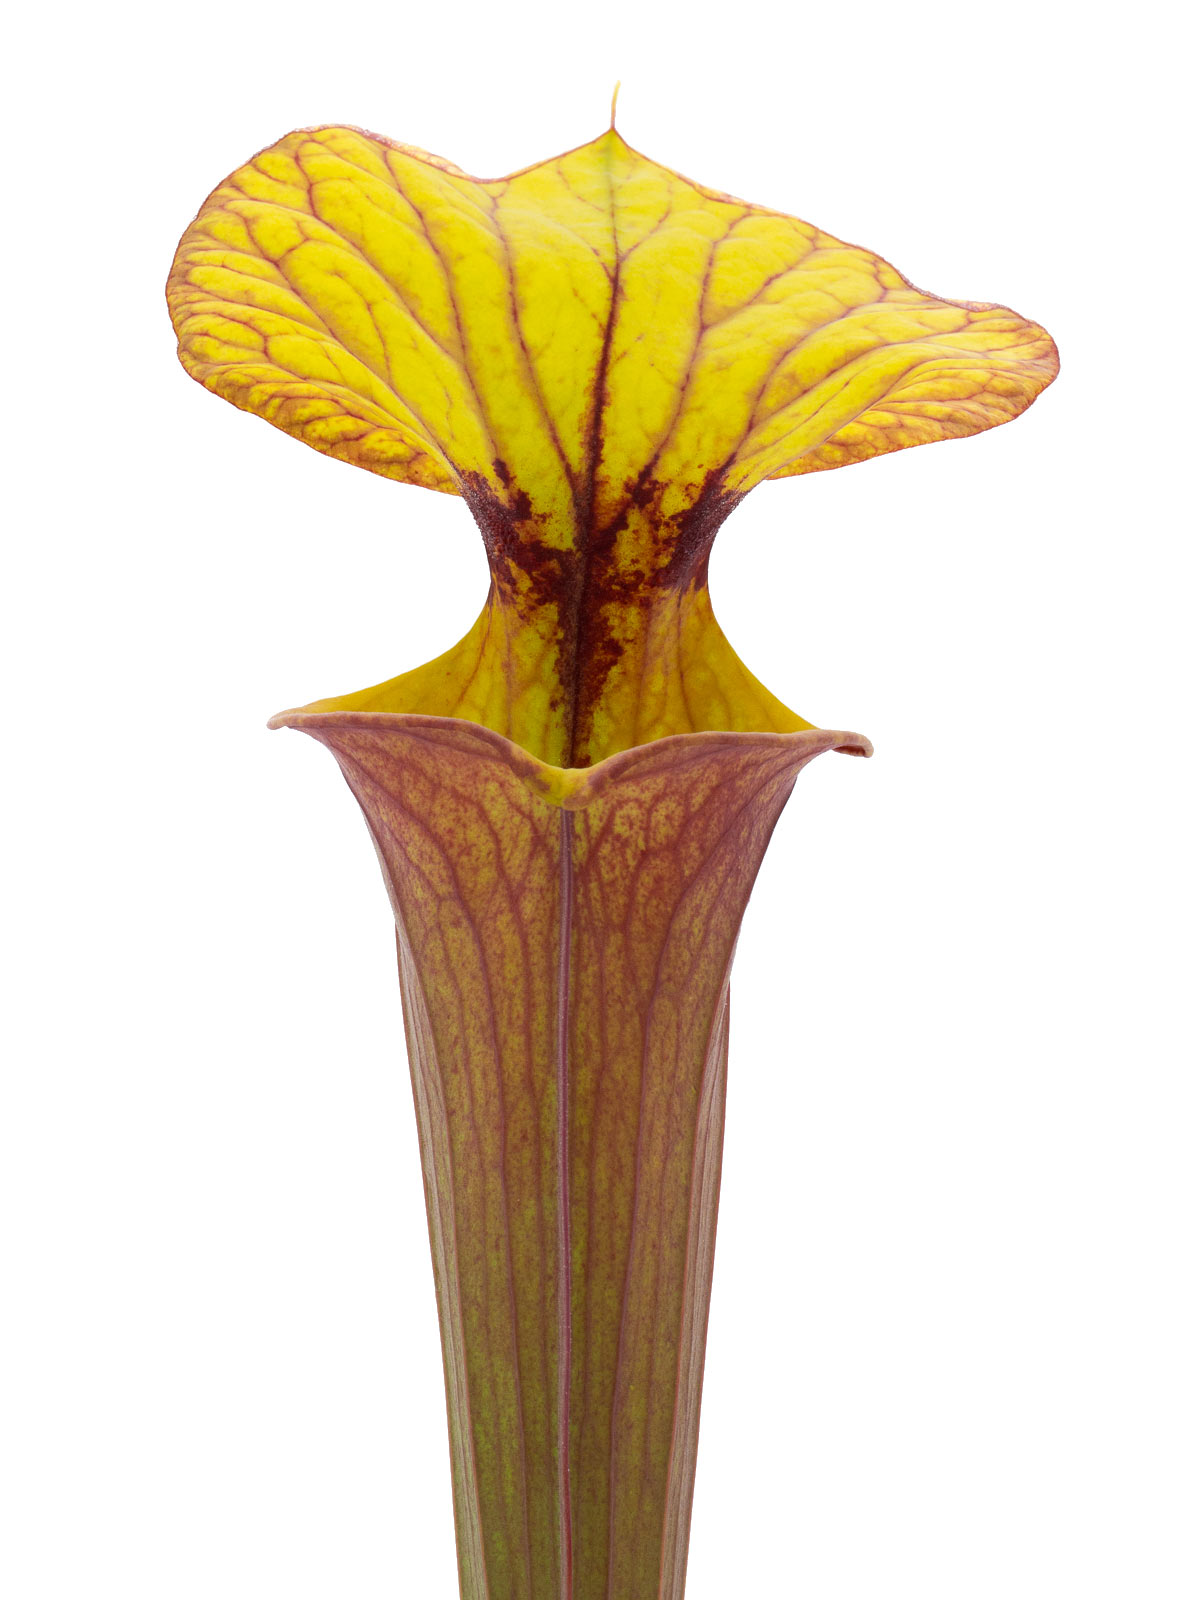 Sarracenia flava var. rubricorpora - MK F105, large pitchers, Apalachicola National Forest, Florida